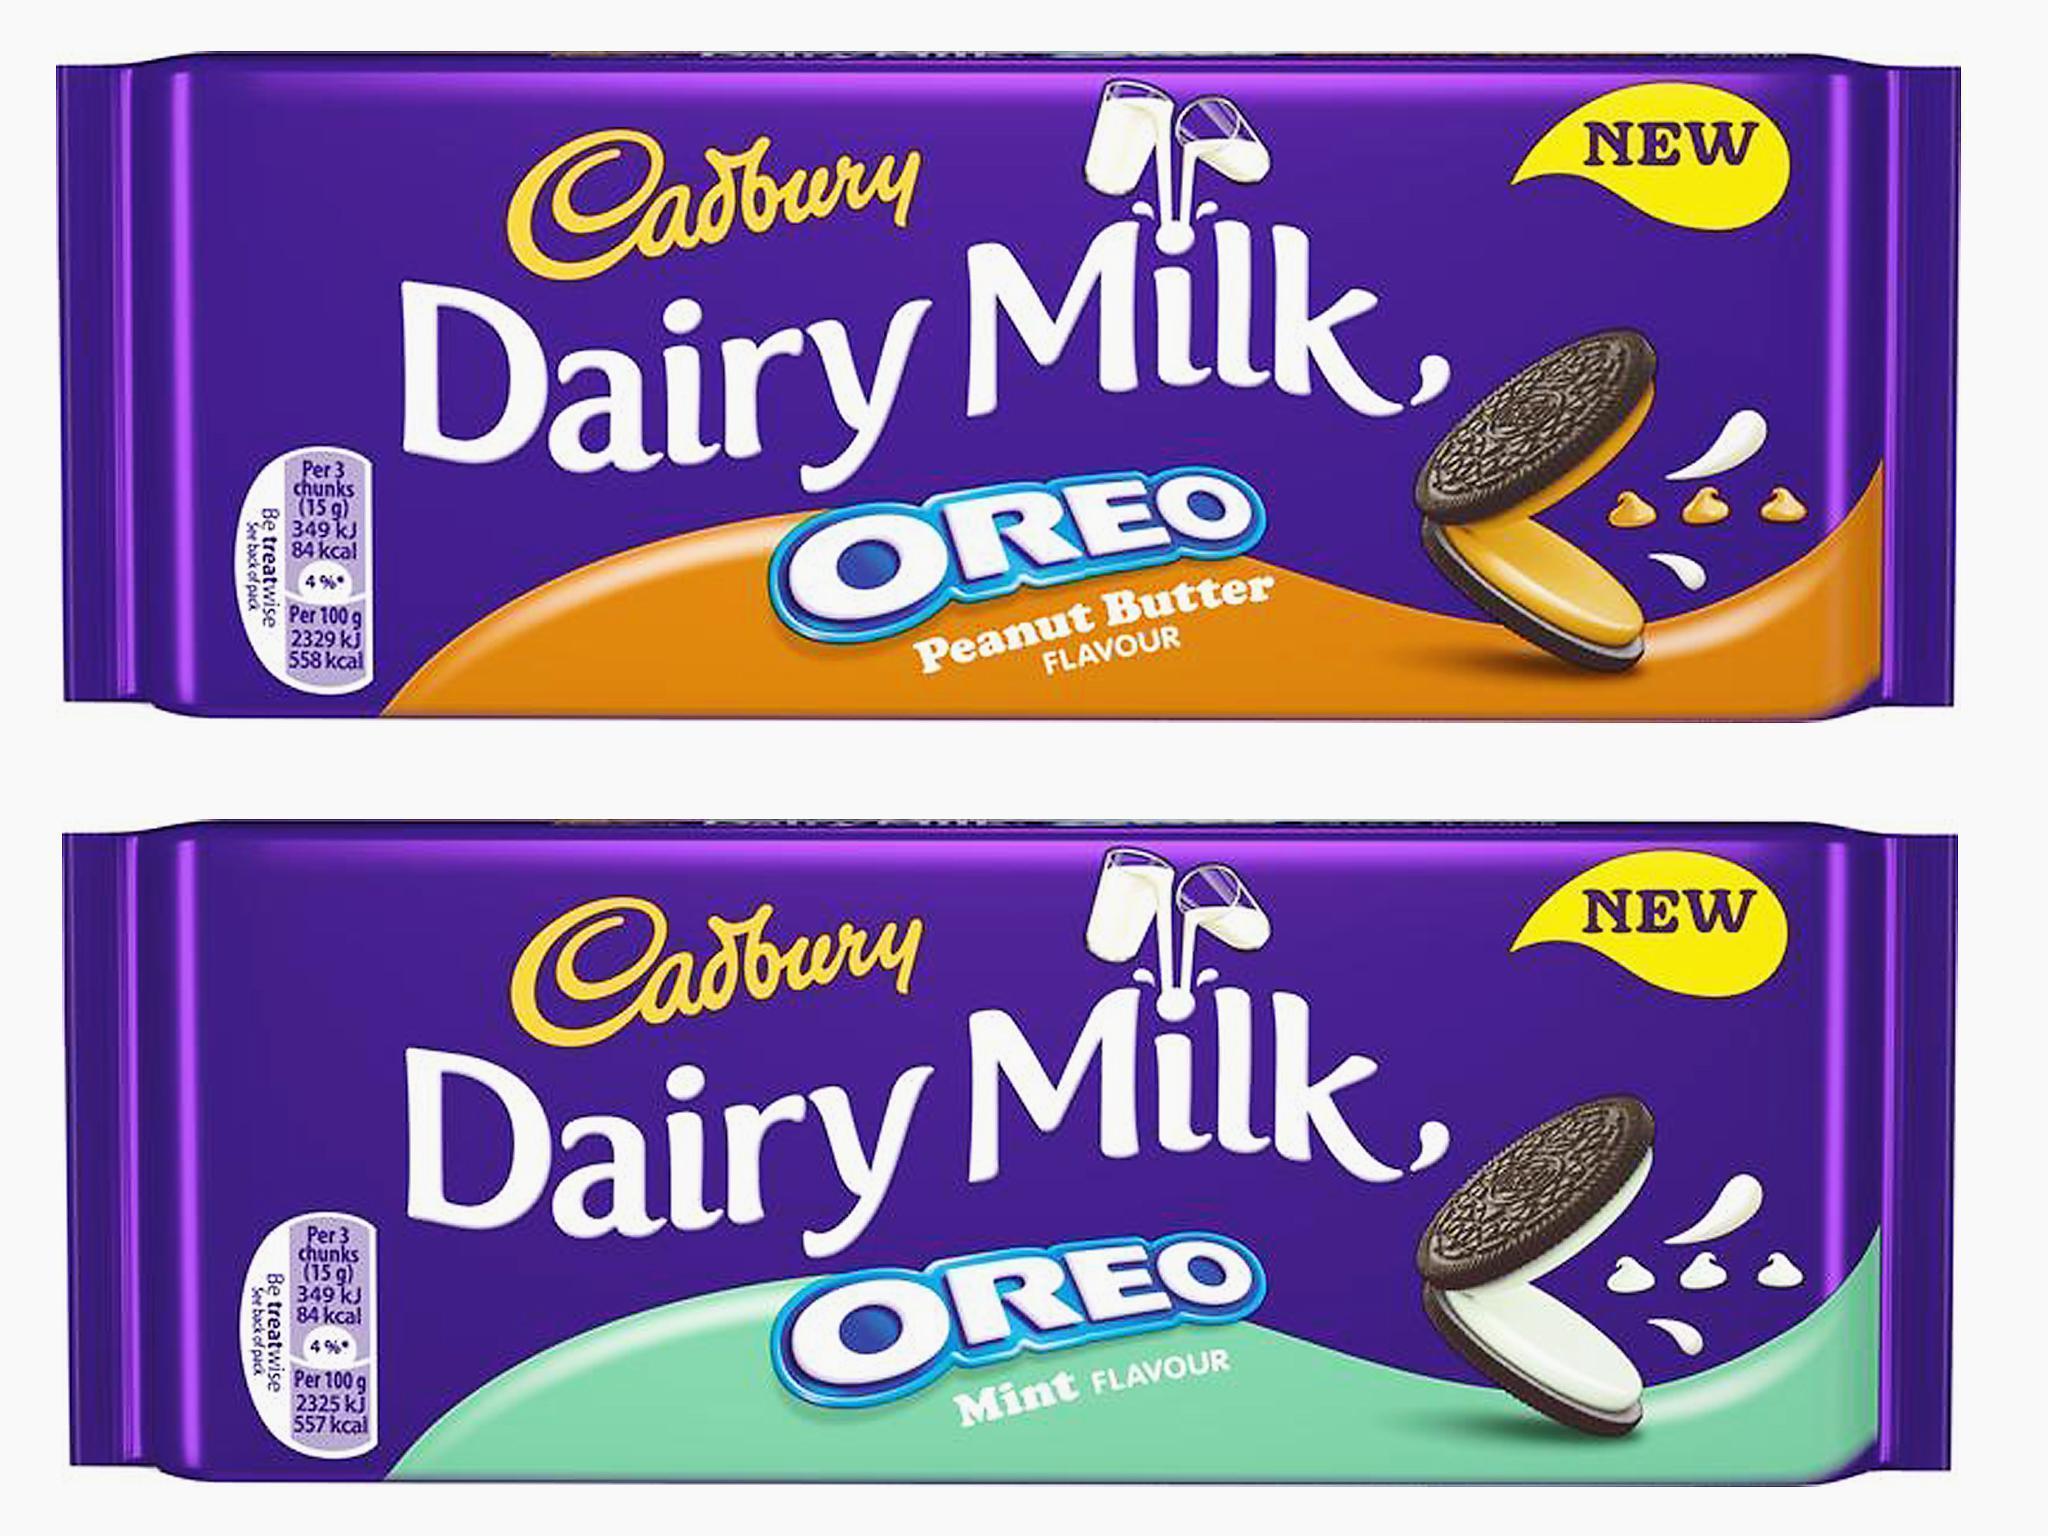 Cadbury Dairy Milk Oreo - 120g Bar - Economy Candy